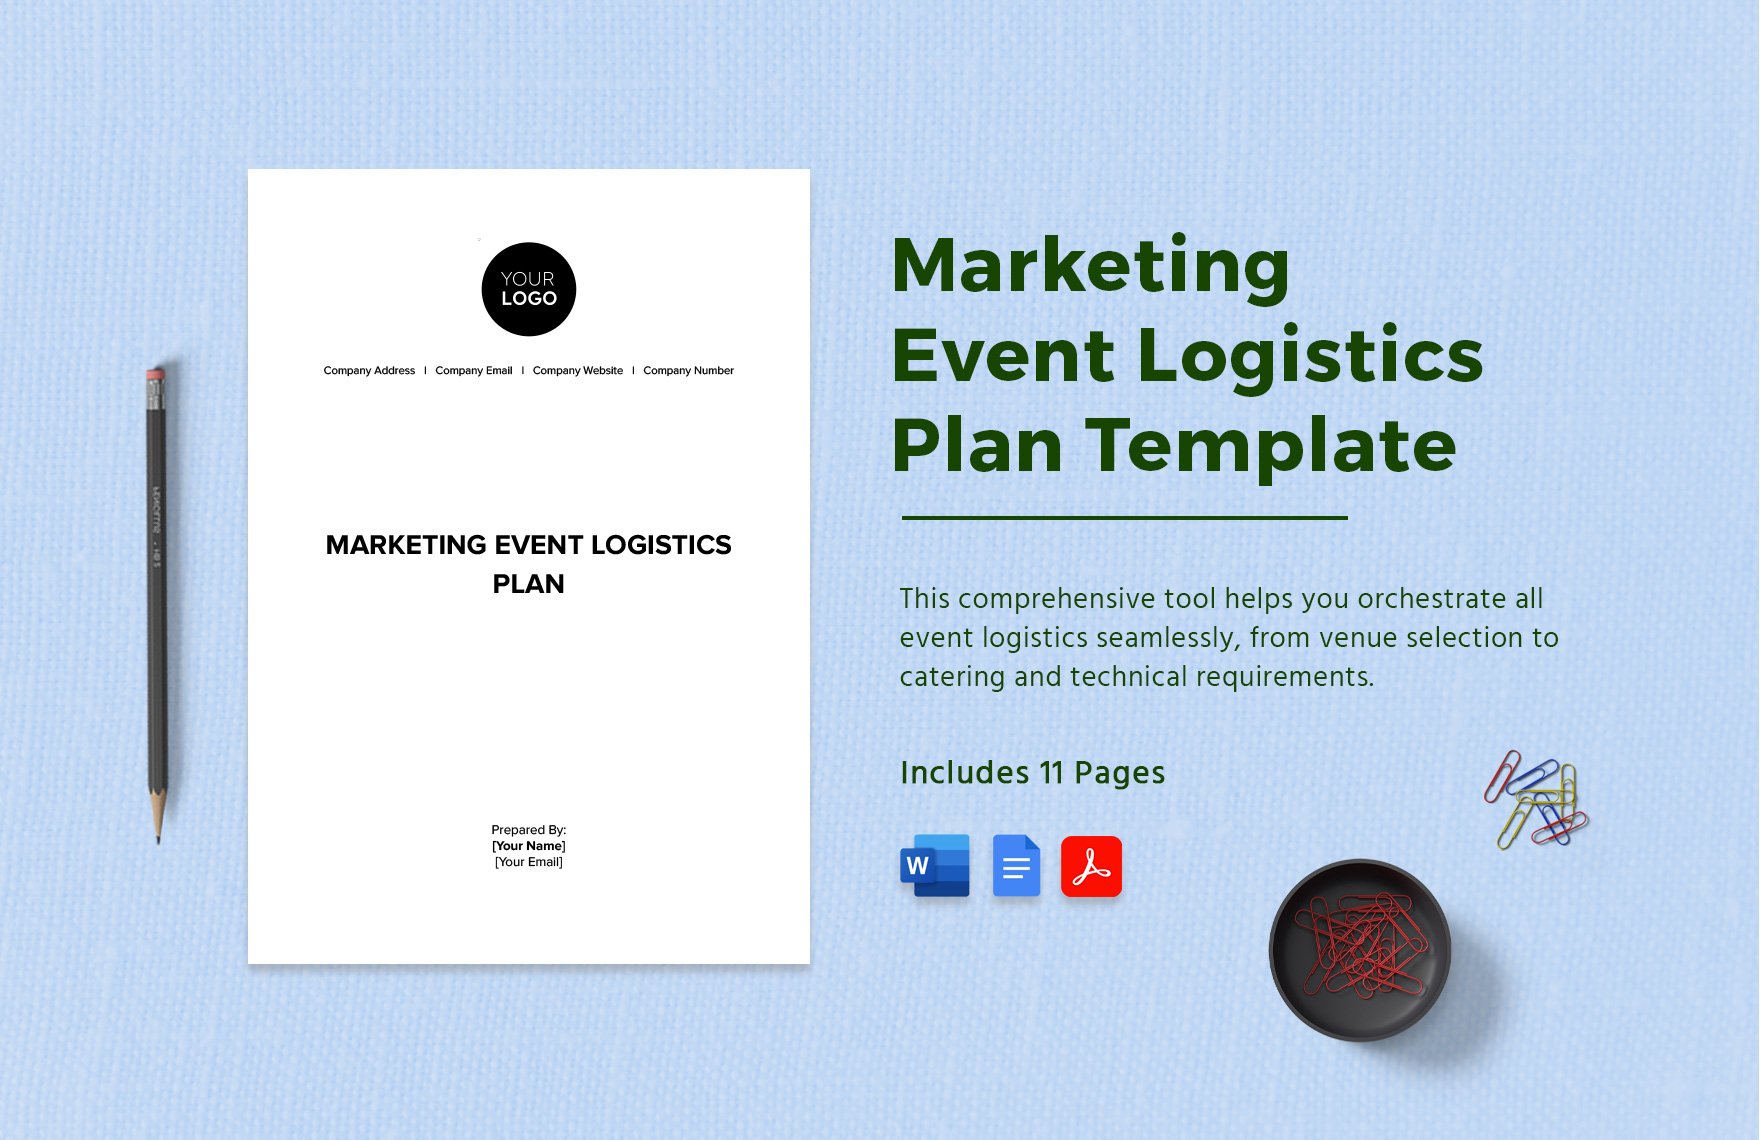 Marketing Event Logistics Plan Template